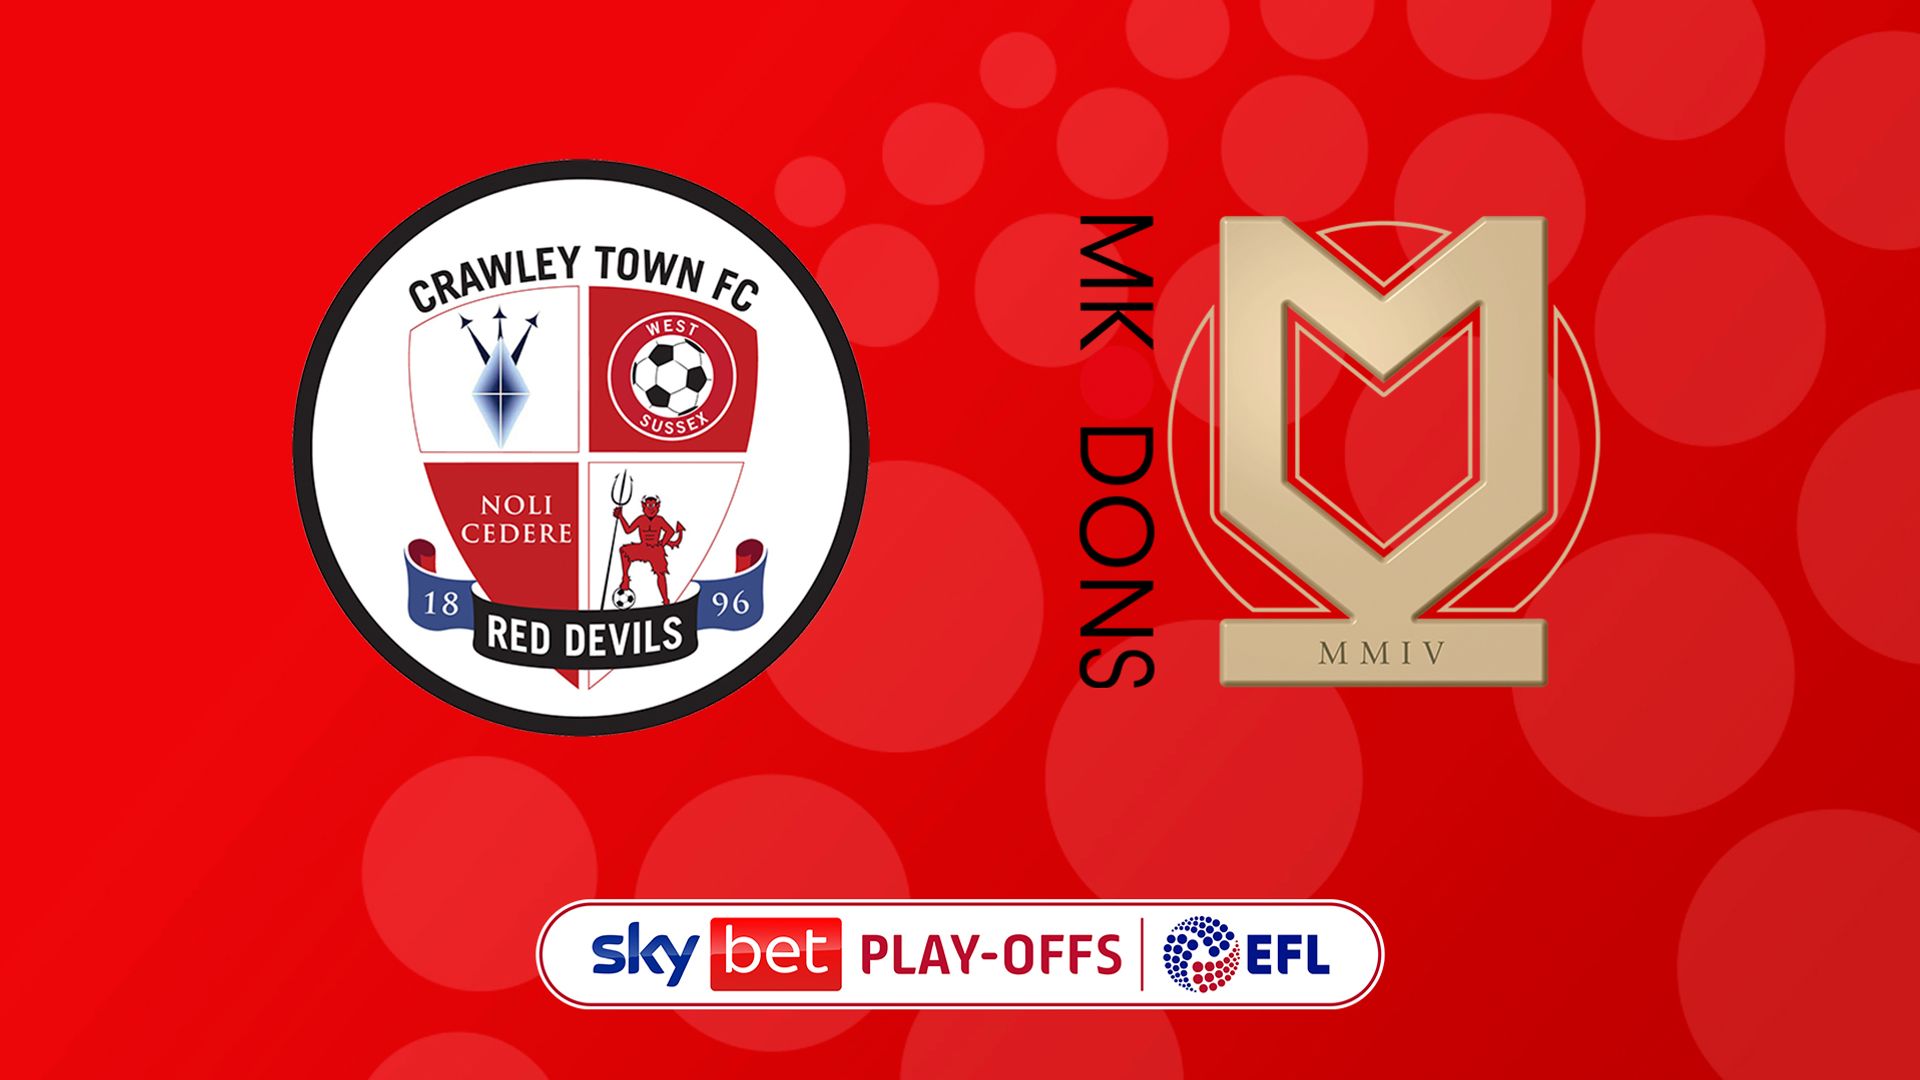 Crawley vs MK Dons League Two play-off postponed